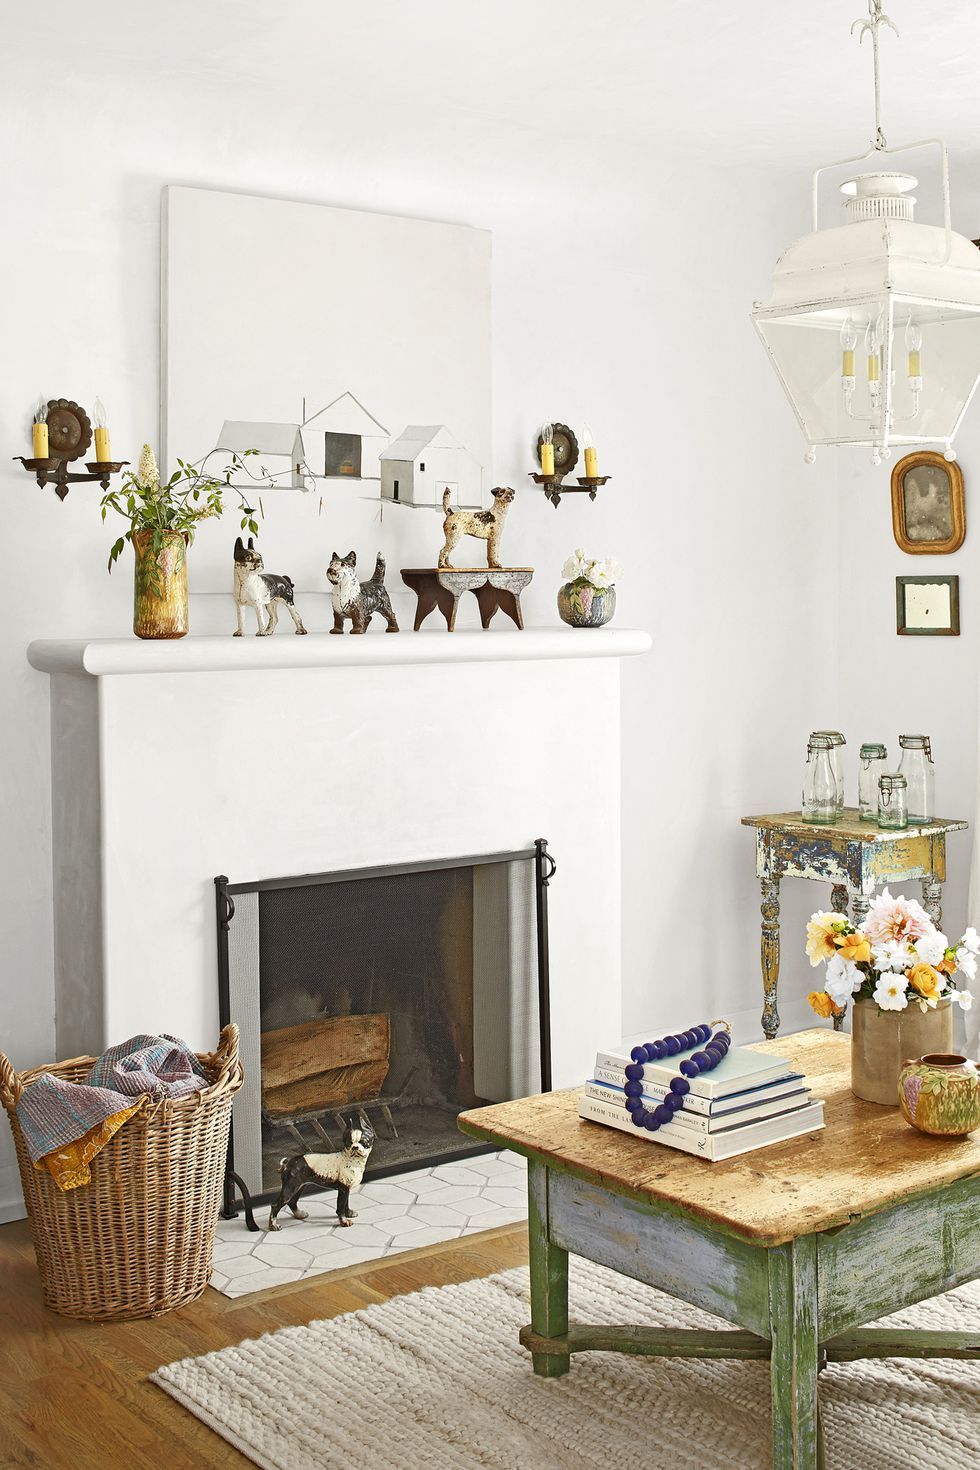 45 Best Fireplace Mantel Ideas, Living Room Fireplace Mantel Decorating Ideas